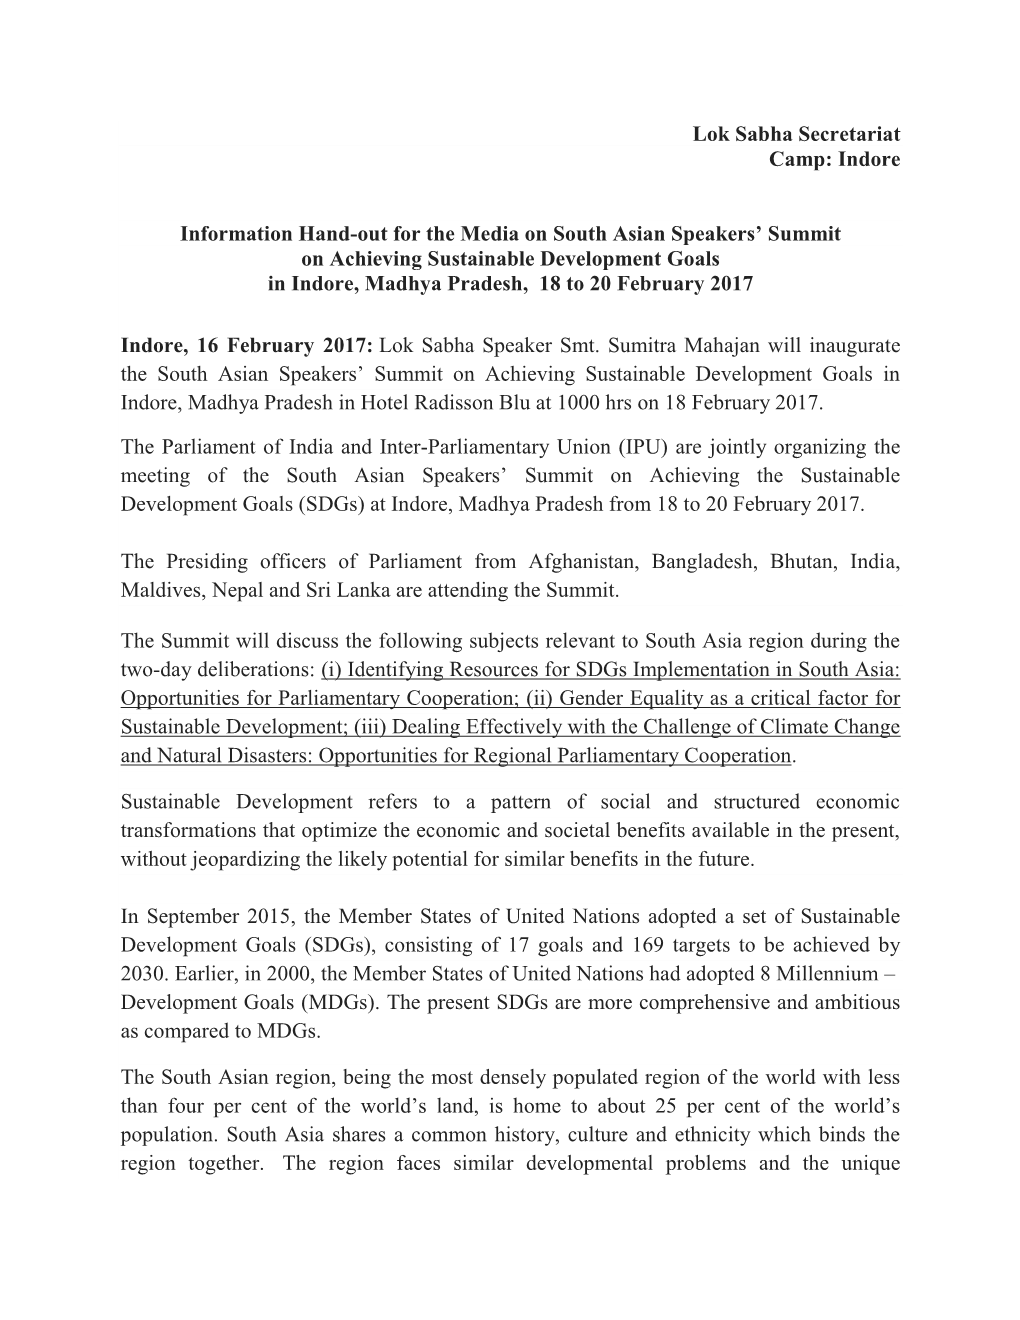 Lok Sabha Secretariat Camp: Indore Information Hand-Out for the Media